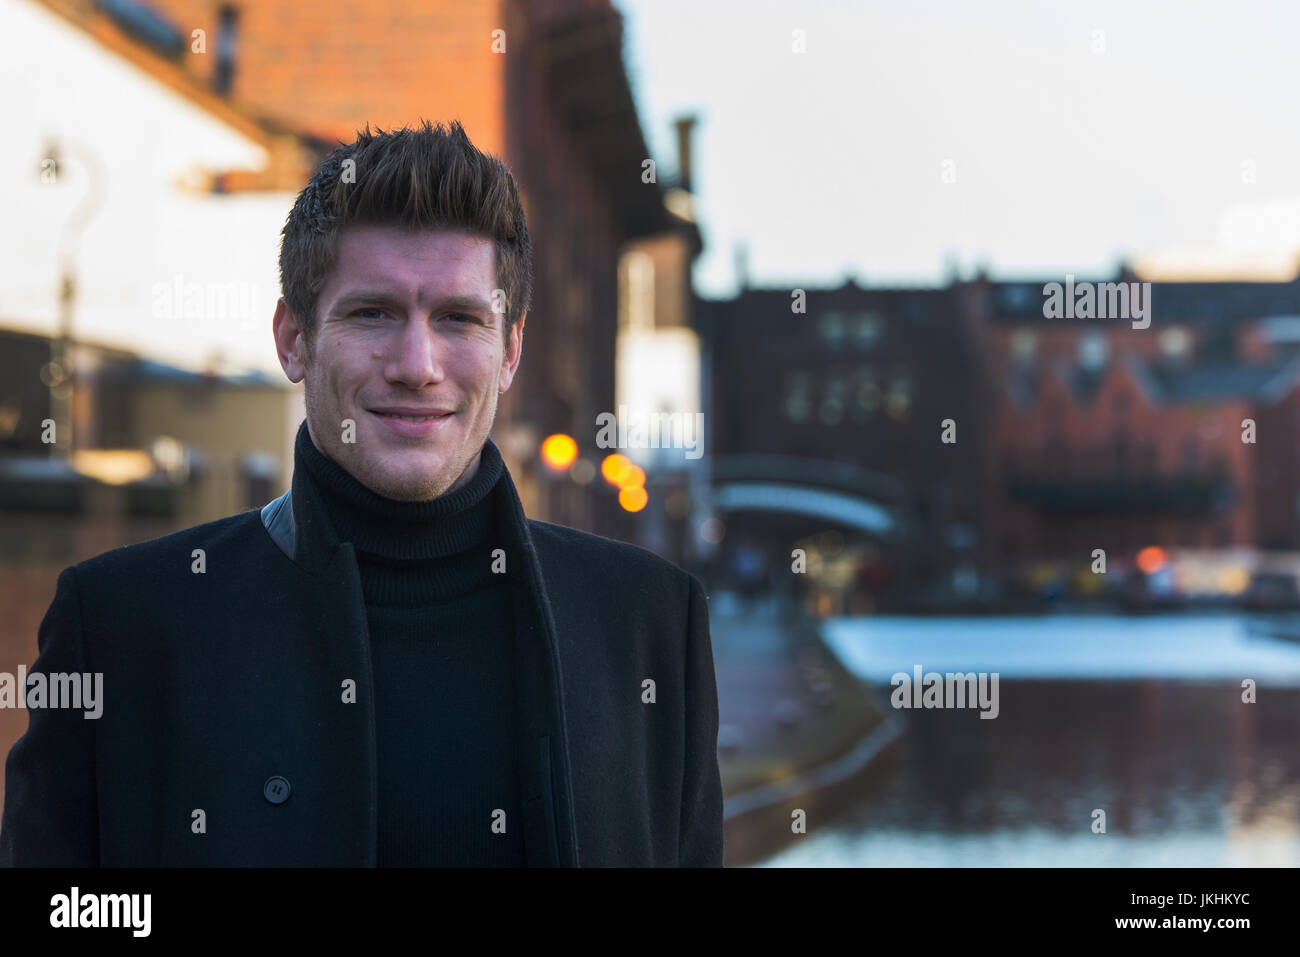 Belgischer Fußballspieler Sebastien Pocognoli fotografiert neben Birmingham, UK-Kanälen. im Januar 2016 Stockfoto